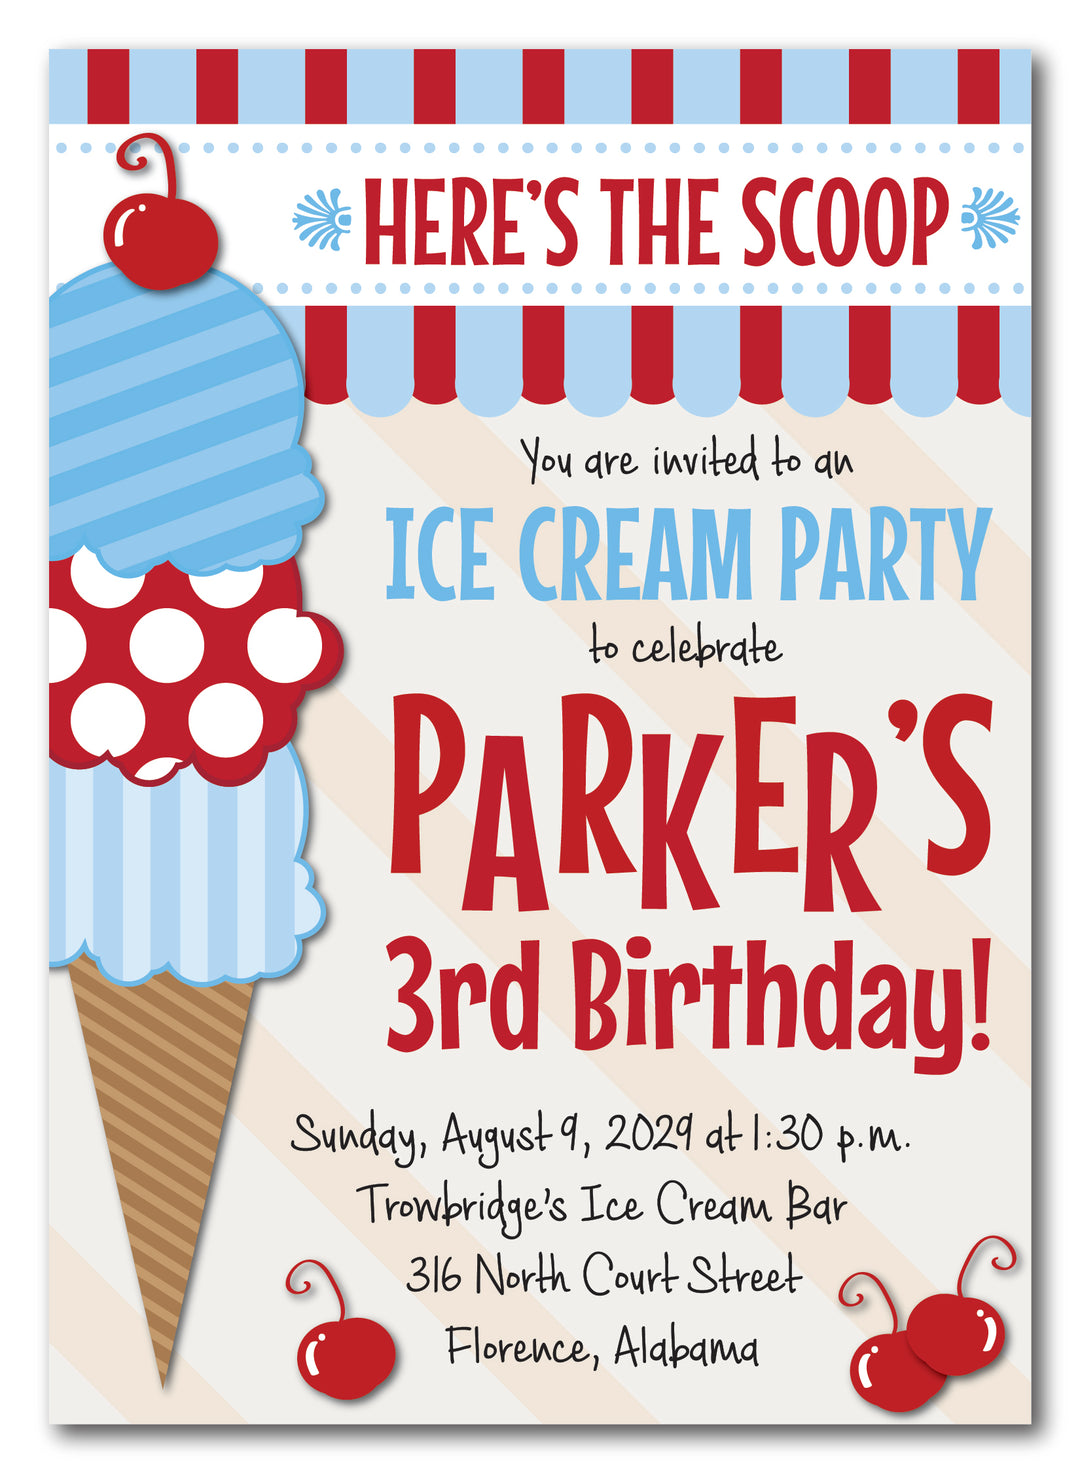 The Ice Cream IV Birthday Party Invitation